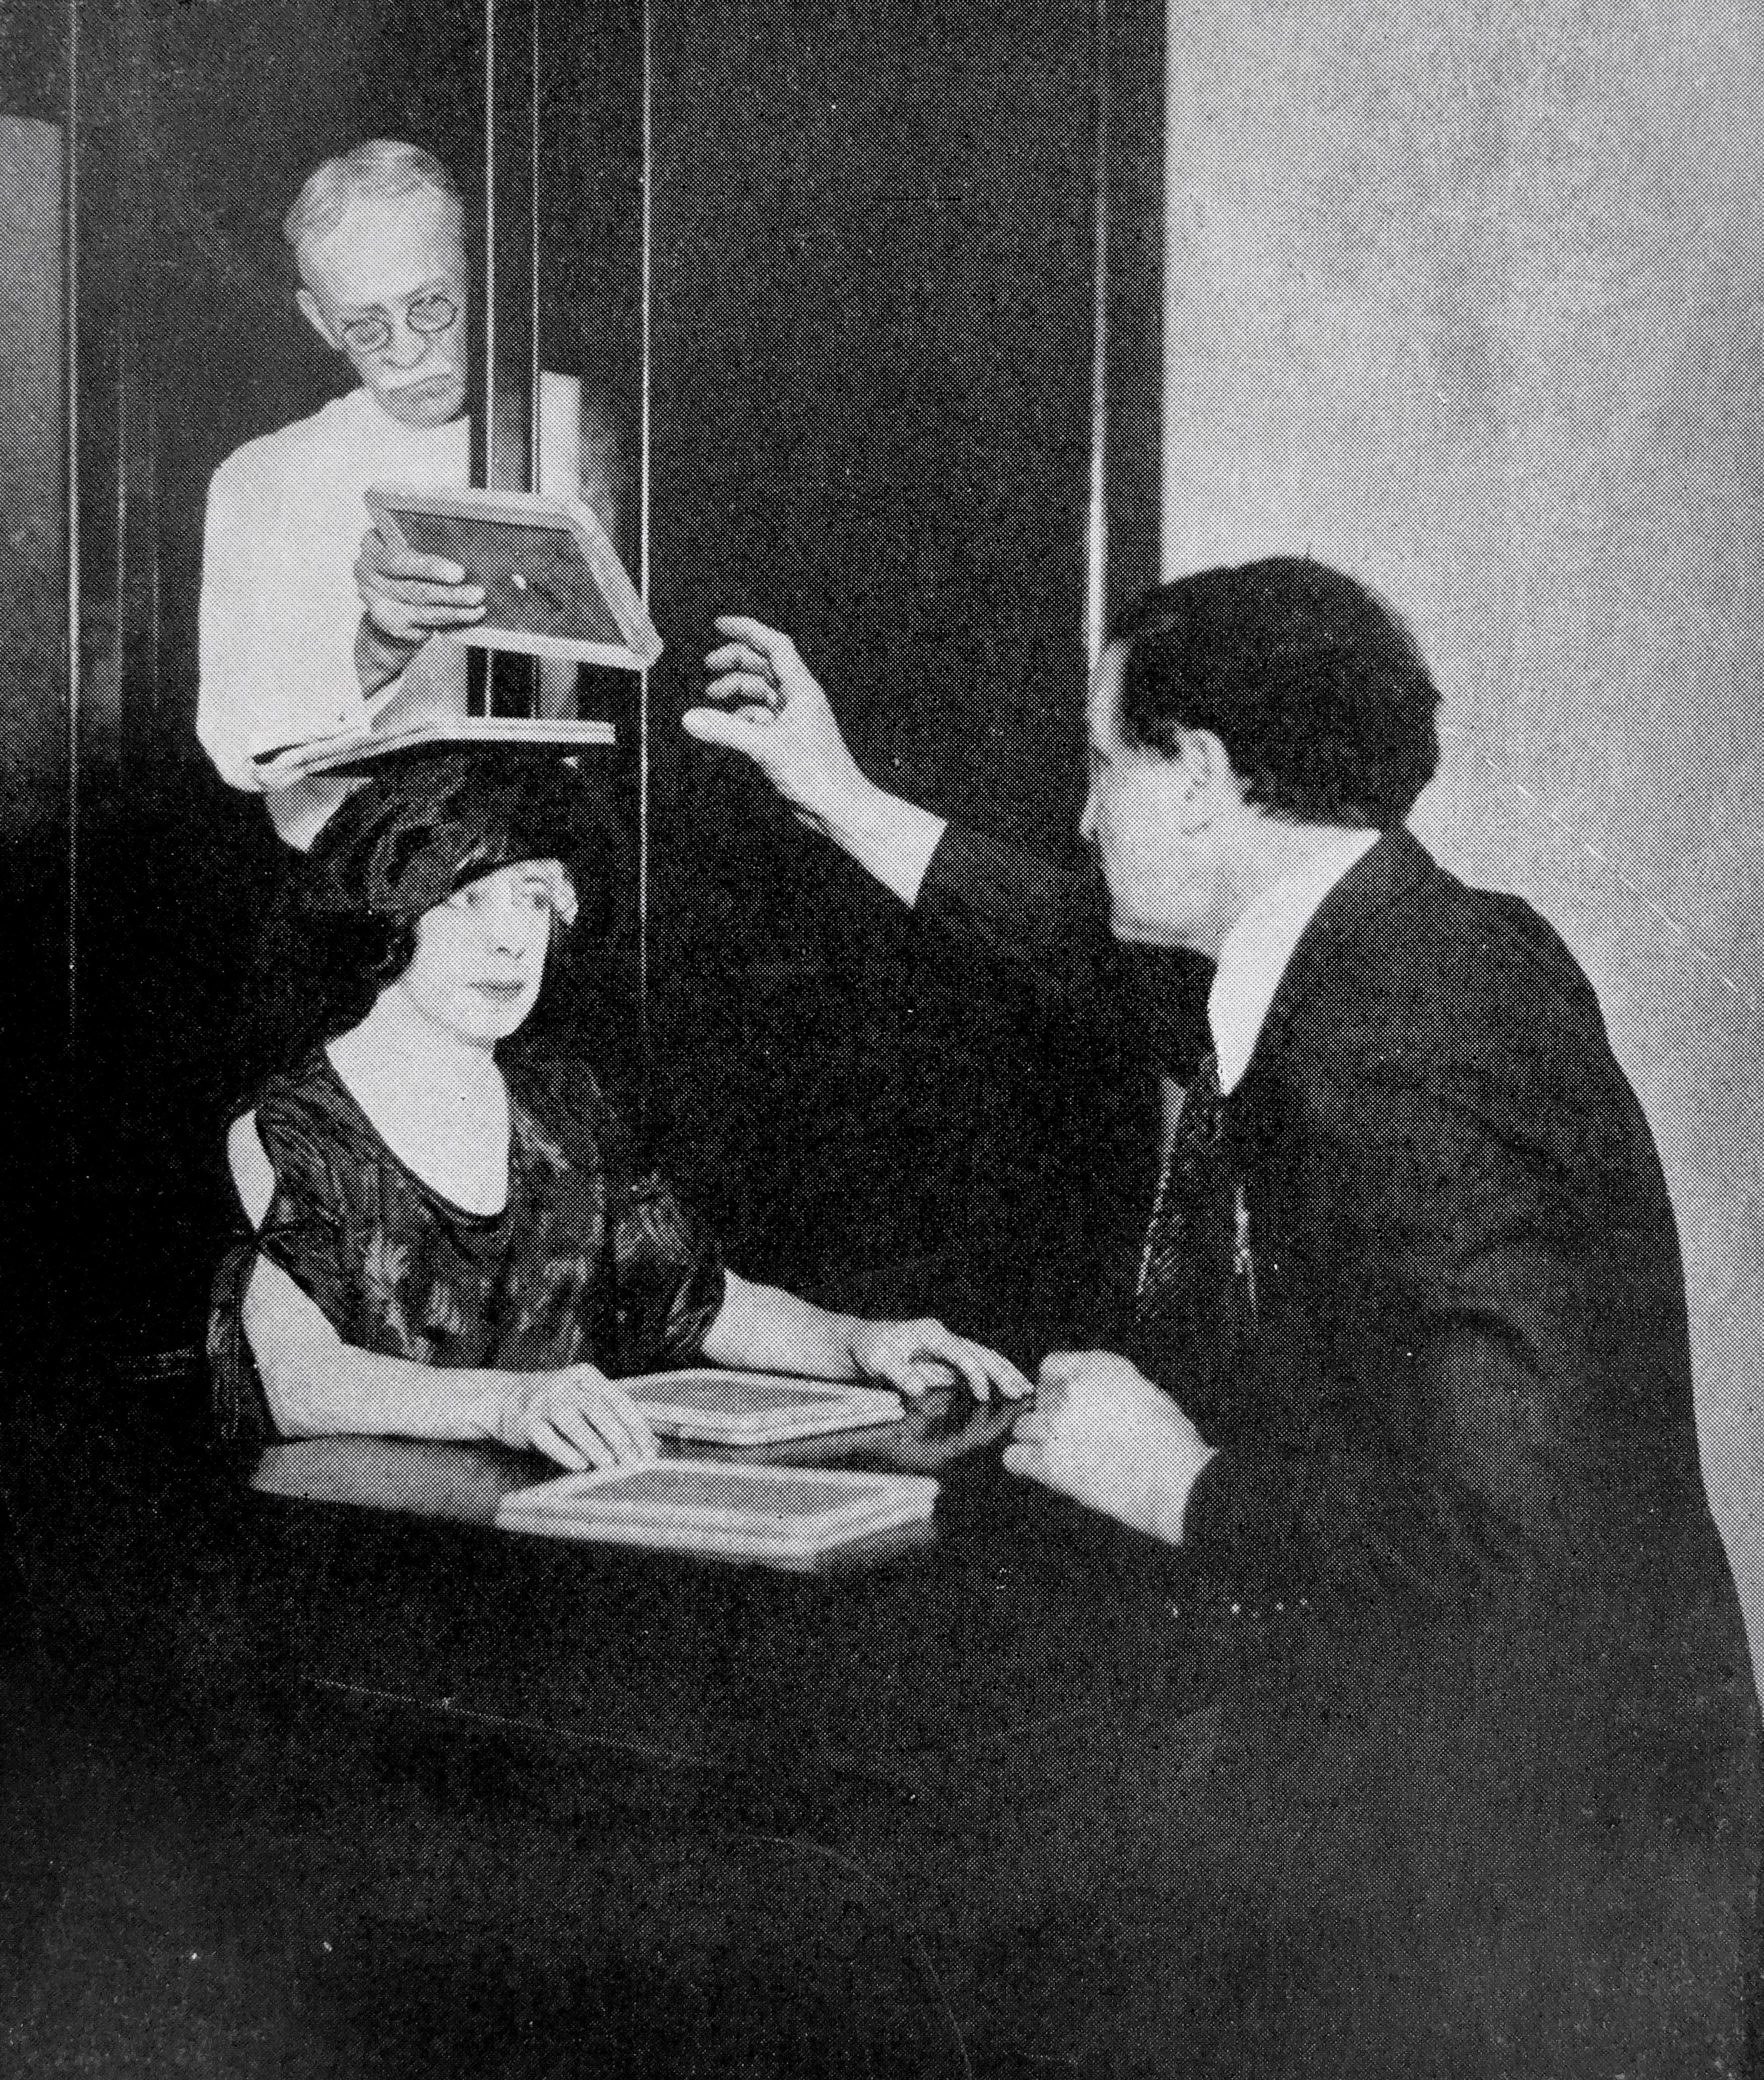 Houdini's book A Magician Among the Spirits (1924